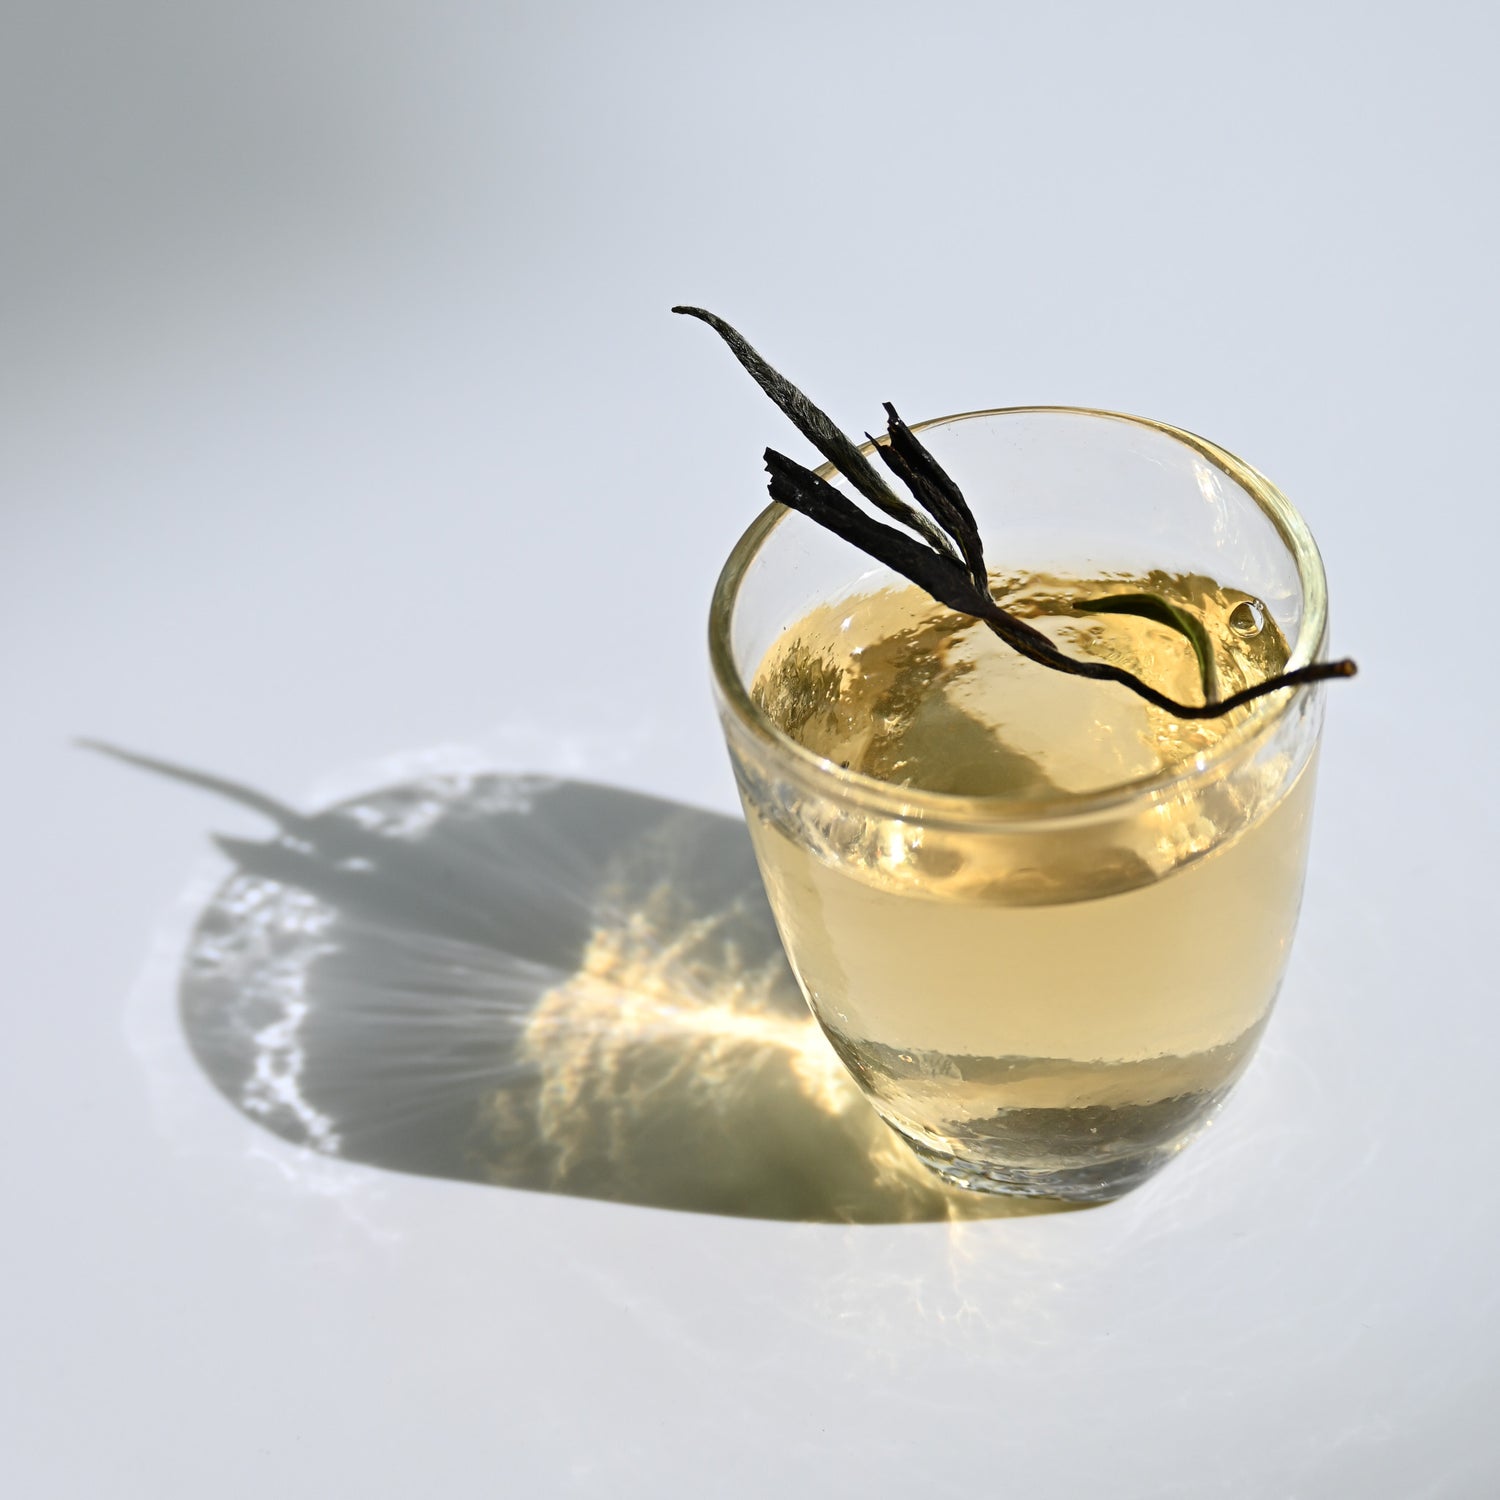 golden hue of Si Chá's White Tea, illuminated by sunlight